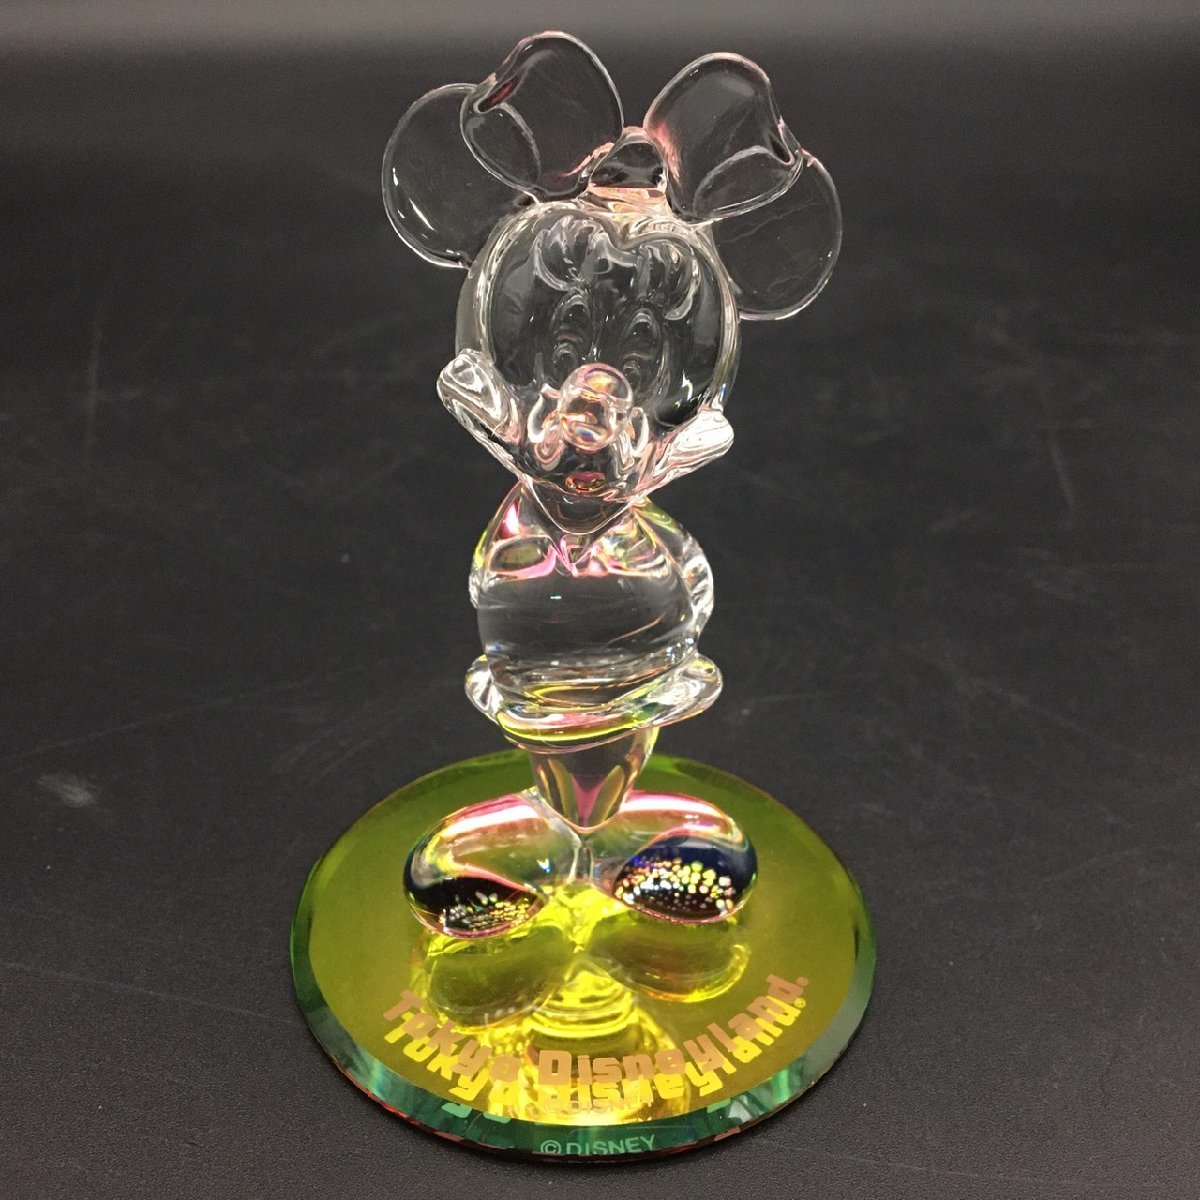 FG1110-68 Swarovski Swarovski Disney Disney minnie украшение произведение искусства crystal стакан H9cm диаметр 6cm 60 размер 